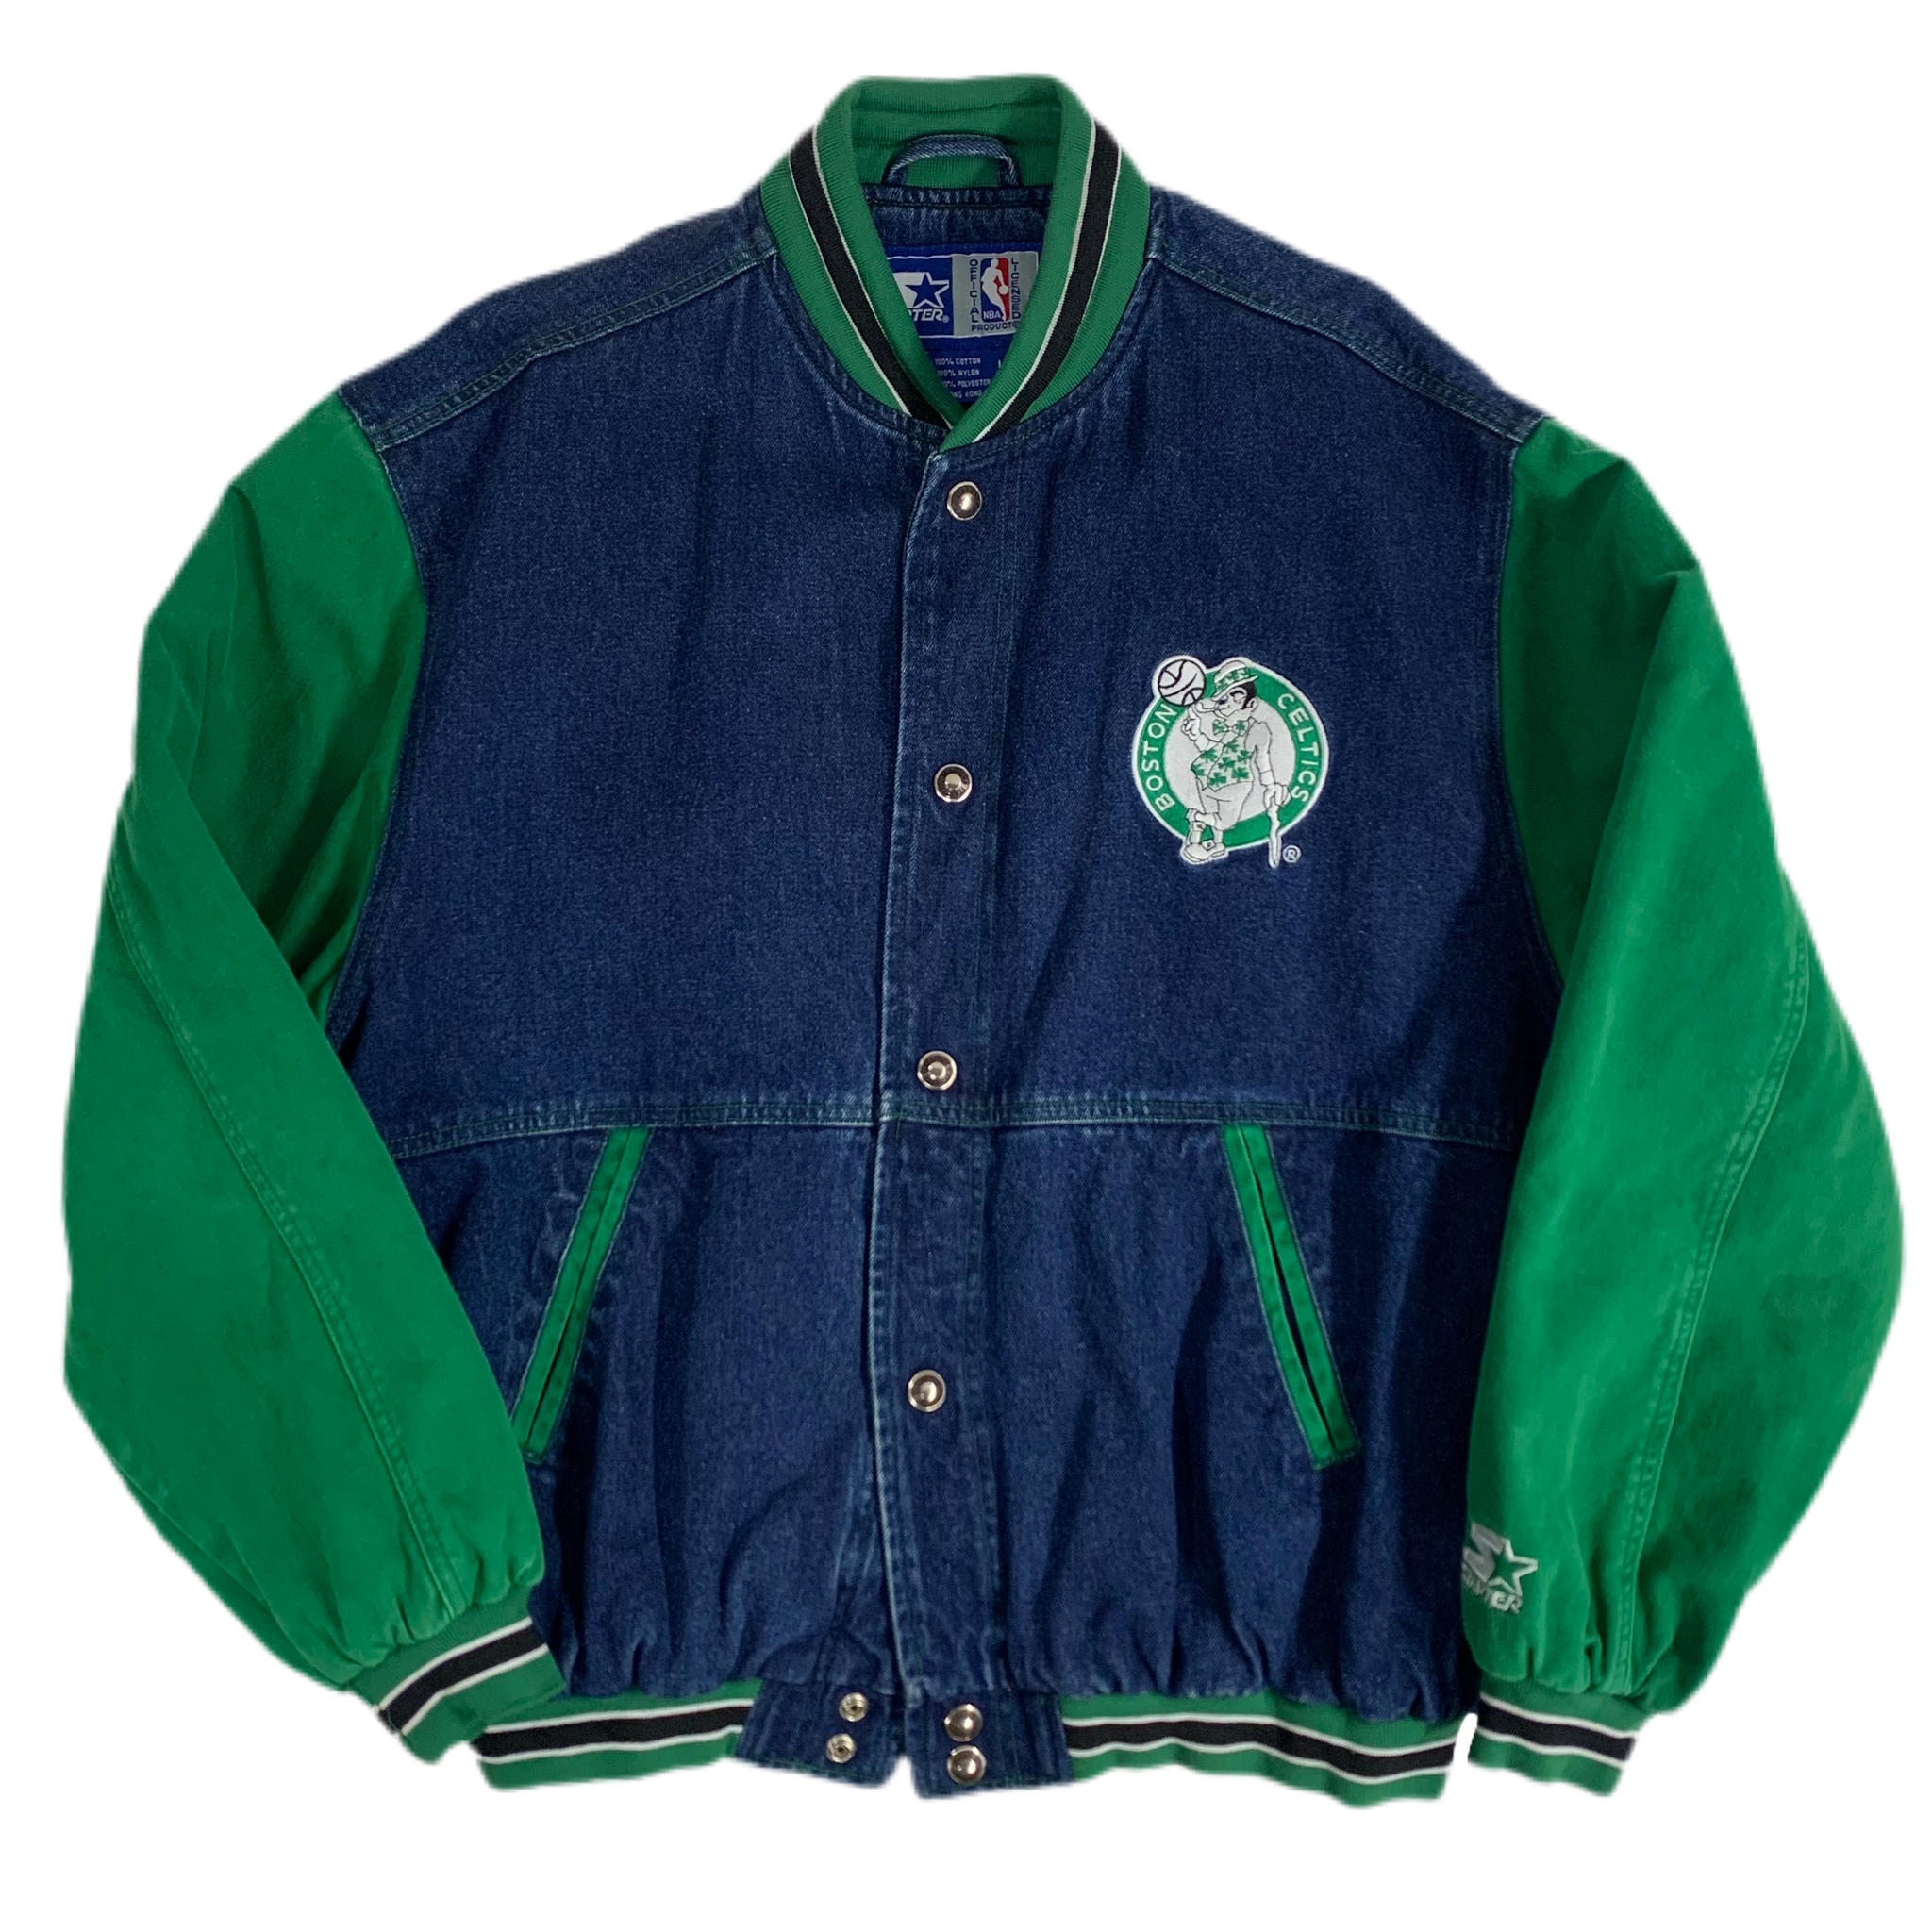 Vintage Boston Celtics Denim Starter Jacket